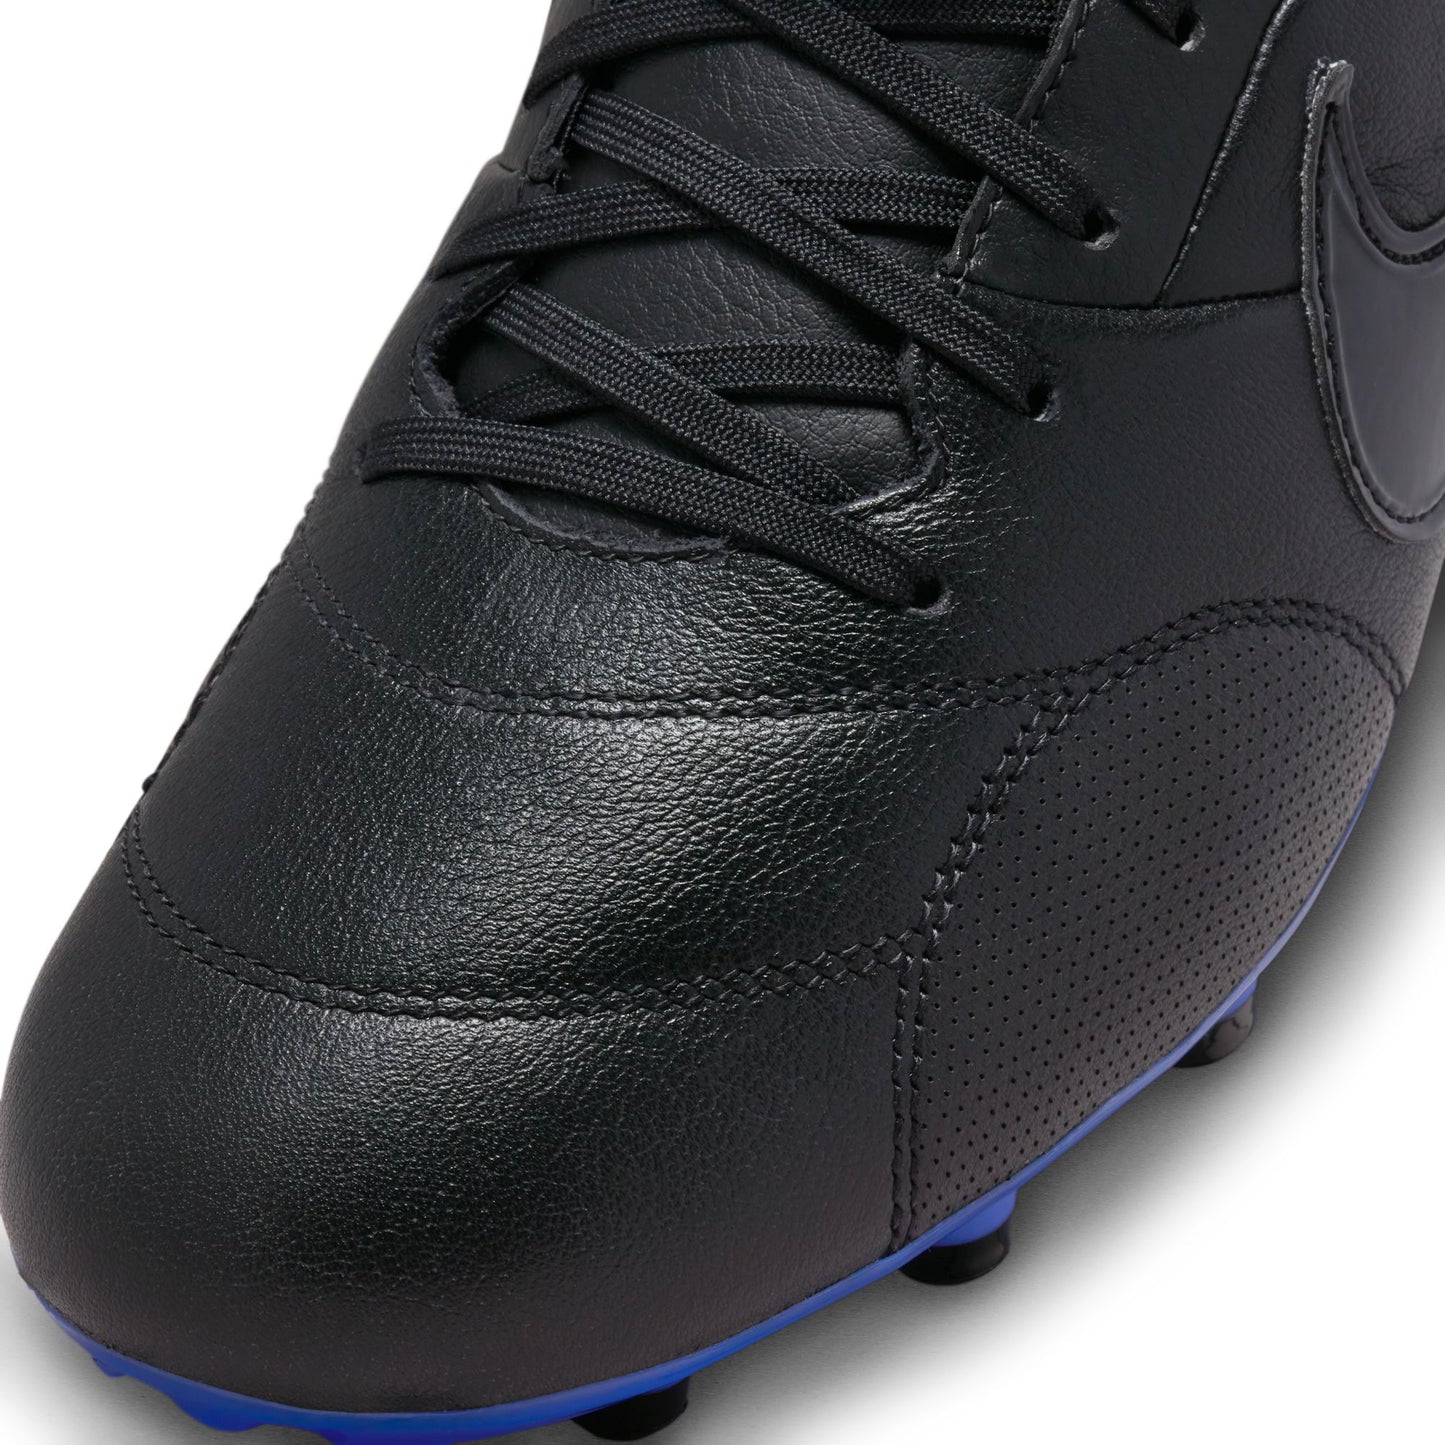 The Nike Premier III FG [Black/Hyper Royal]